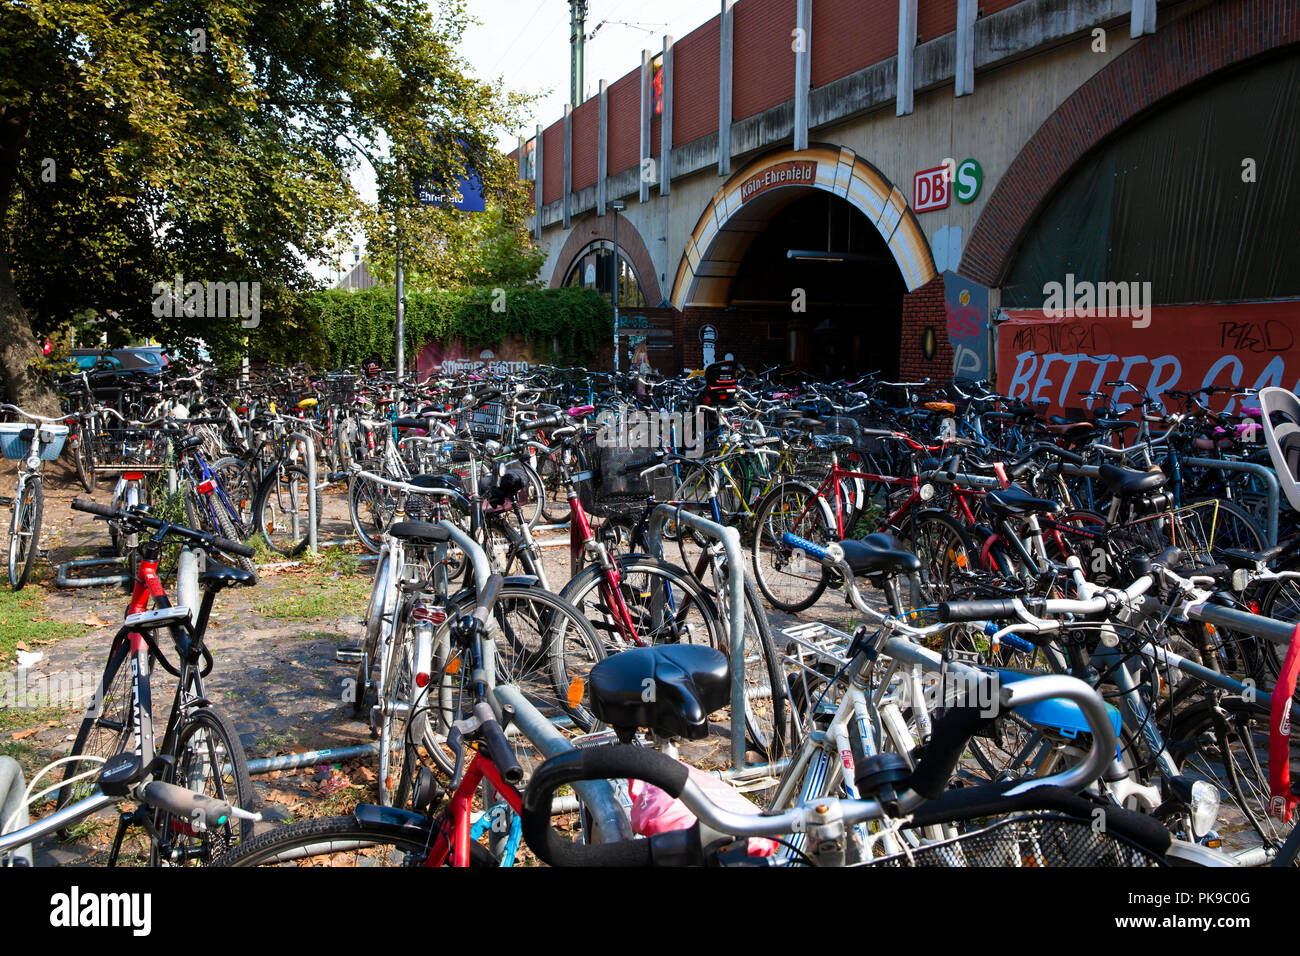 parked bicycles in front of the station Cologne-Ehrenfeld, Cologne, Germany.  abgestellte Fahrraeder vor dem Bahnhof Koeln-Ehrenfeld, Koeln, Deutschla Stock Photo